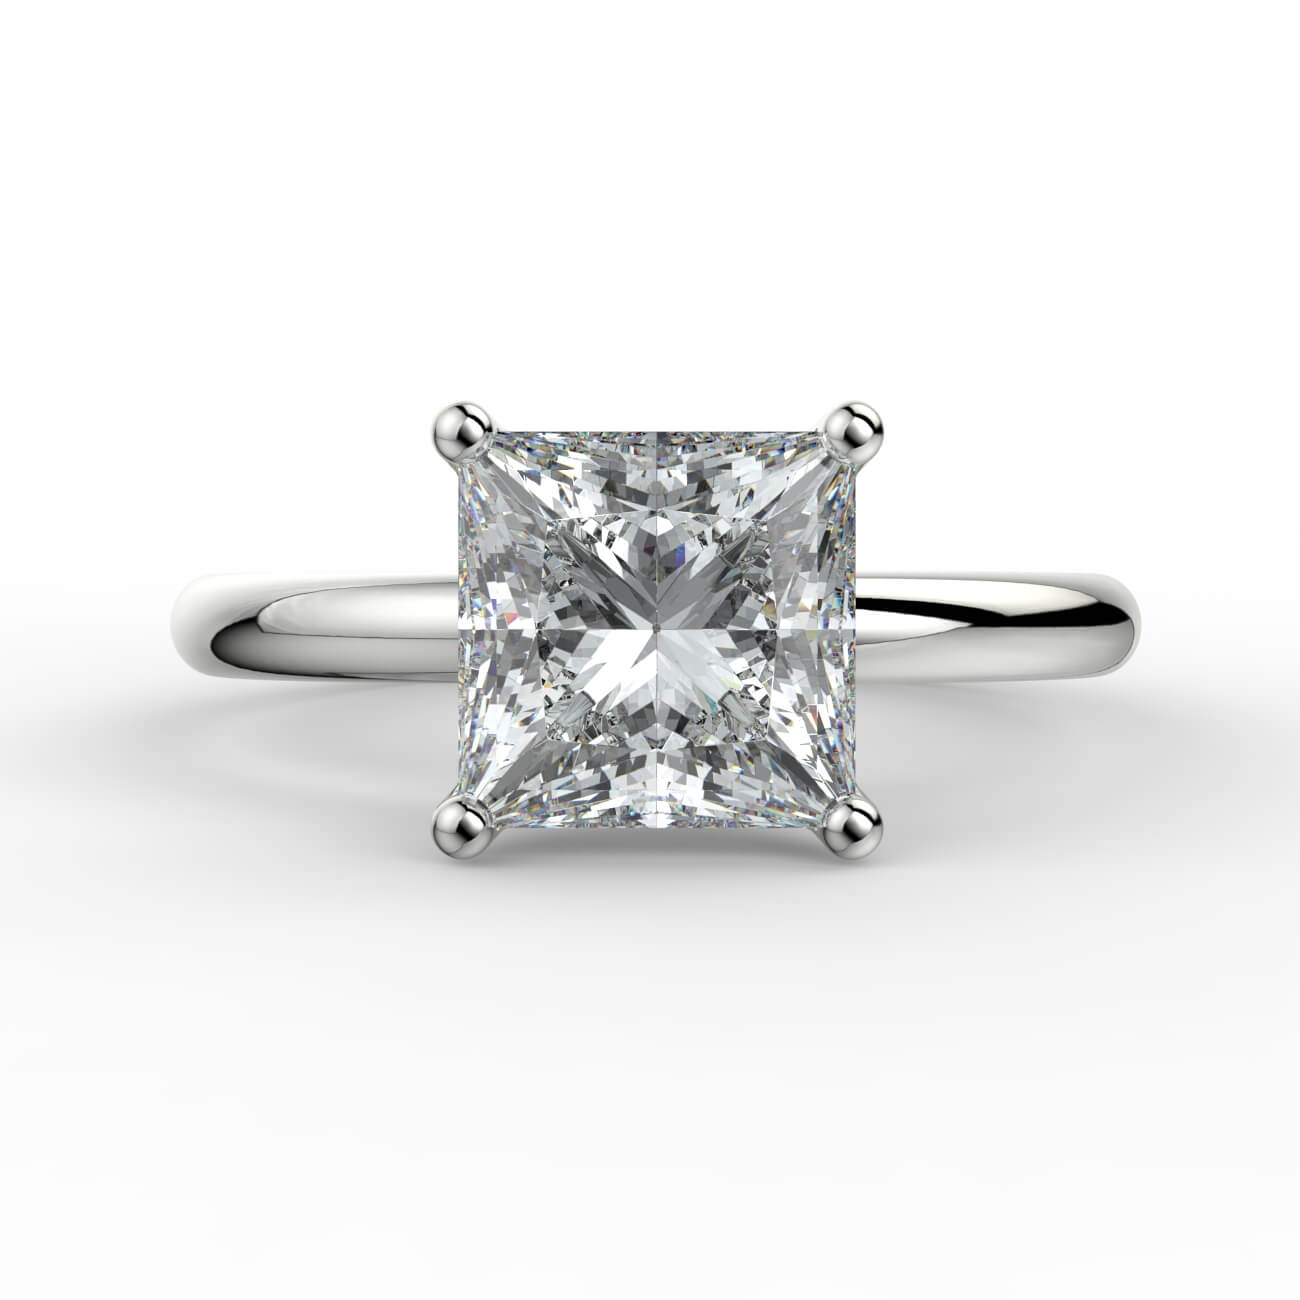 Solitaire princess cut diamond engagement ring in white gold – Australian Diamond Network